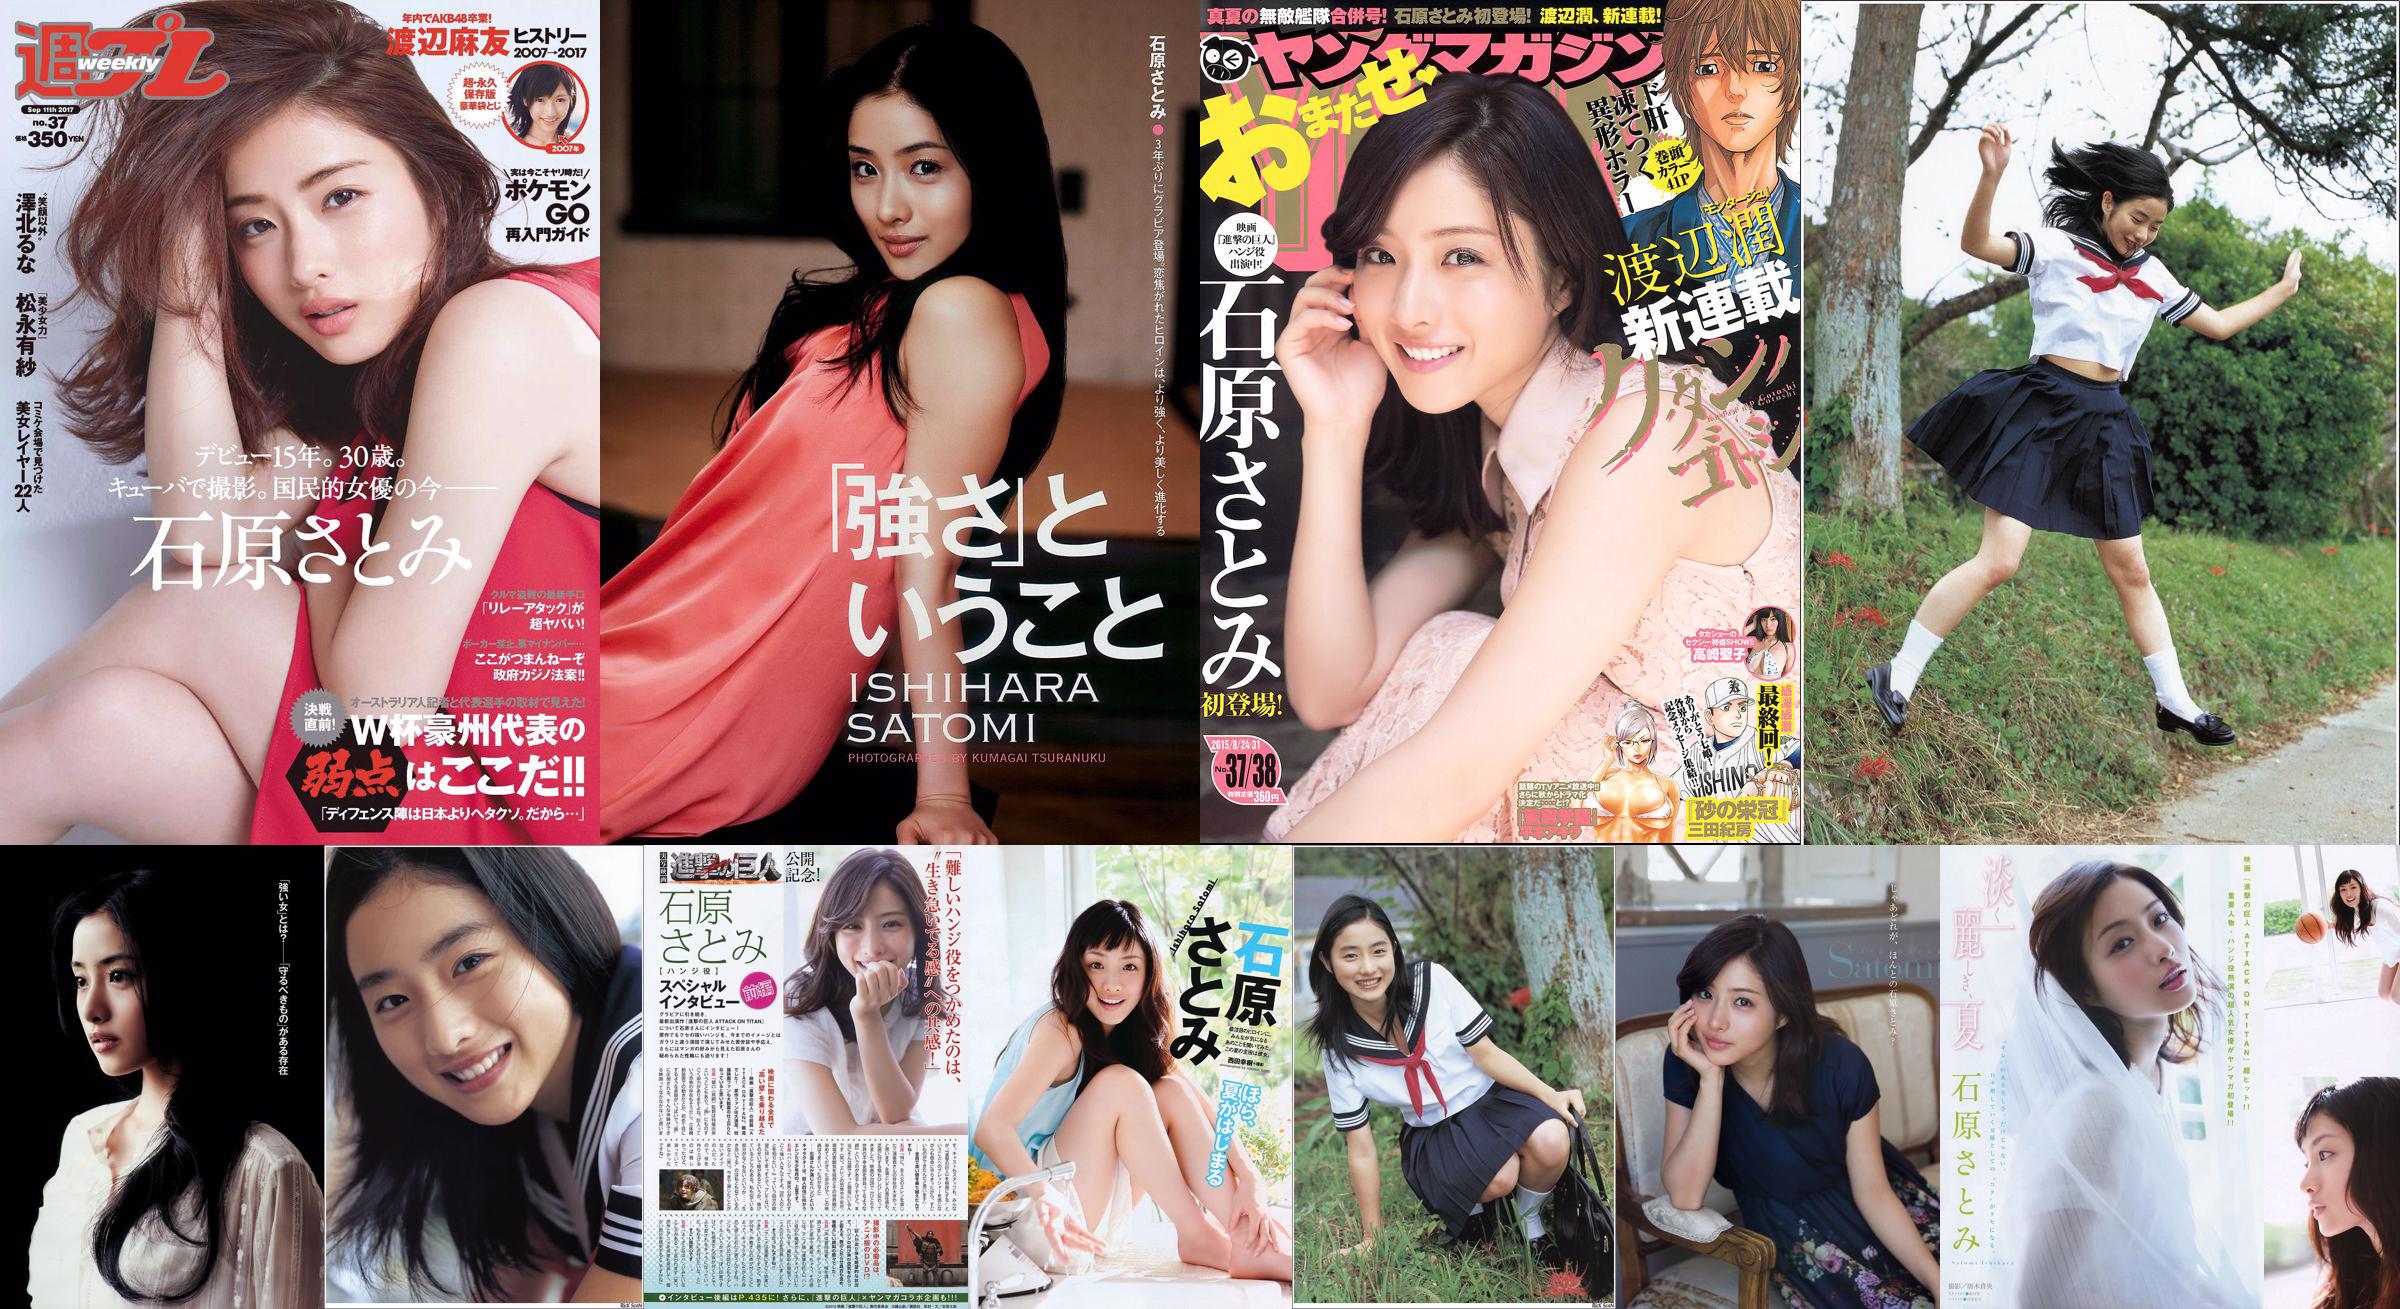 [Majalah Muda] Ishihara Majalah Foto Takasaki Seiko 2015 No.37-38 No.c46310 Halaman 1